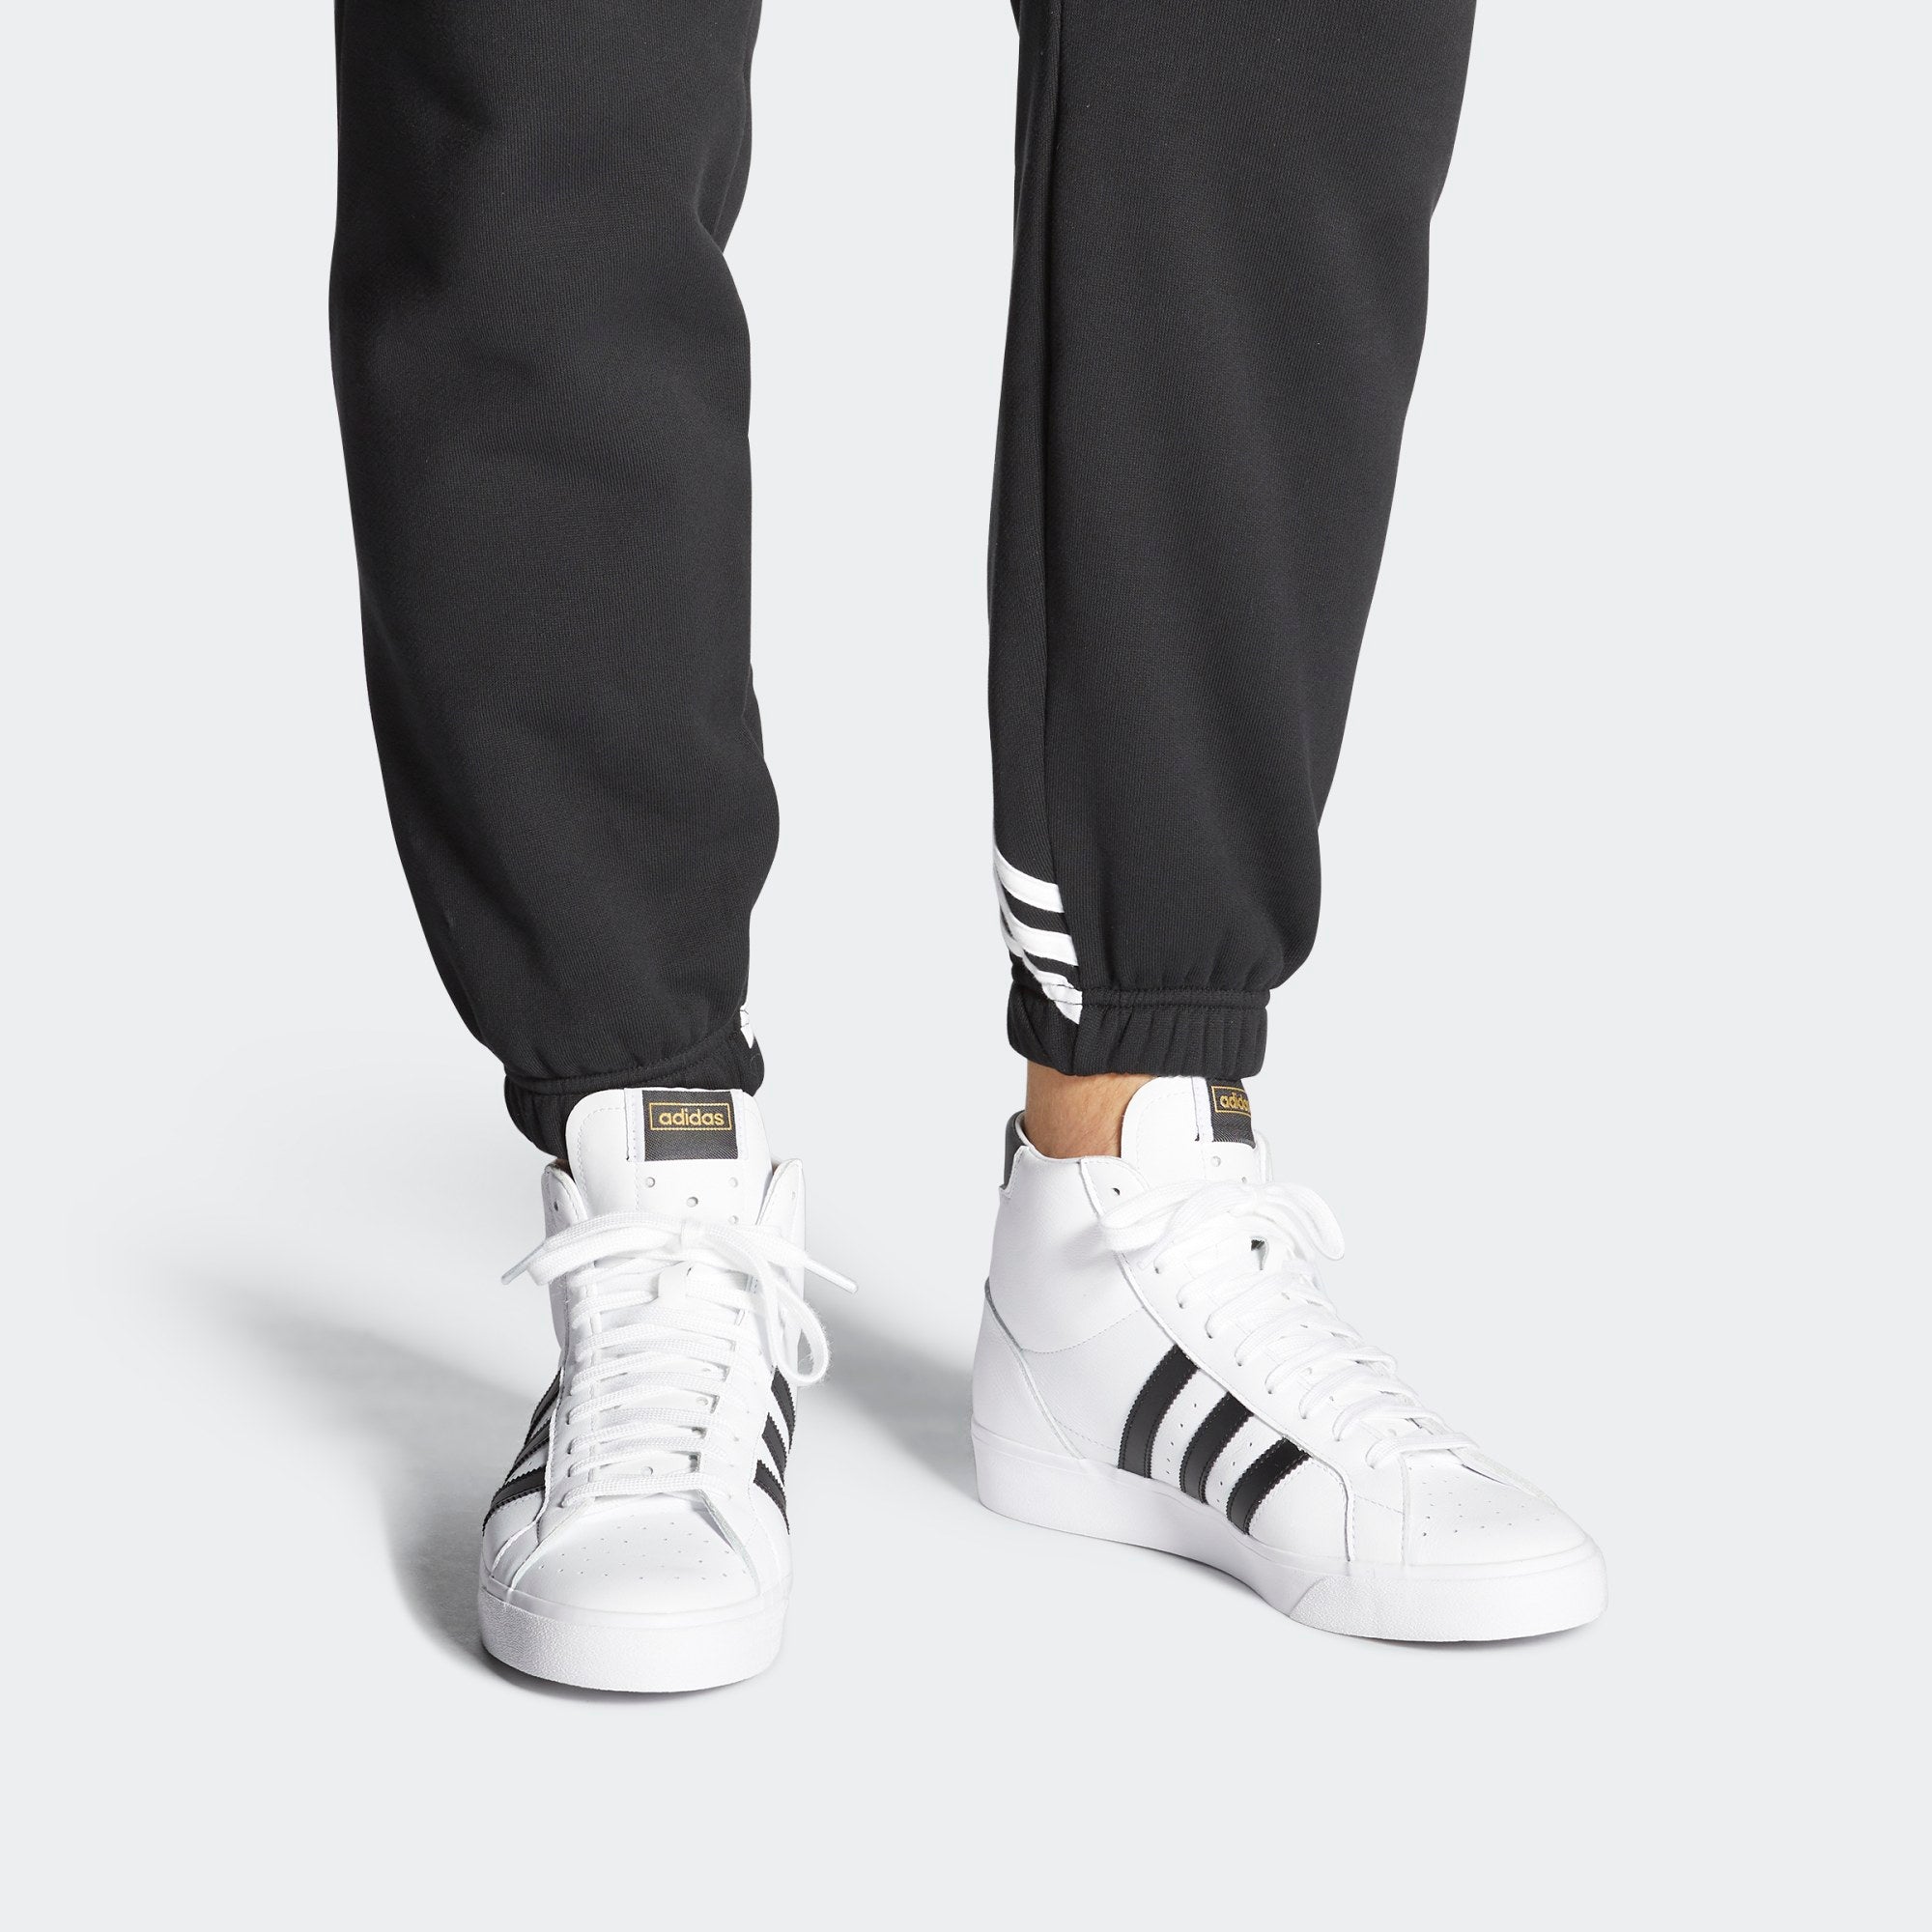 Adidas Originals Basket Profi Shoes White / Black / Gold [FW3108] | Find Sole